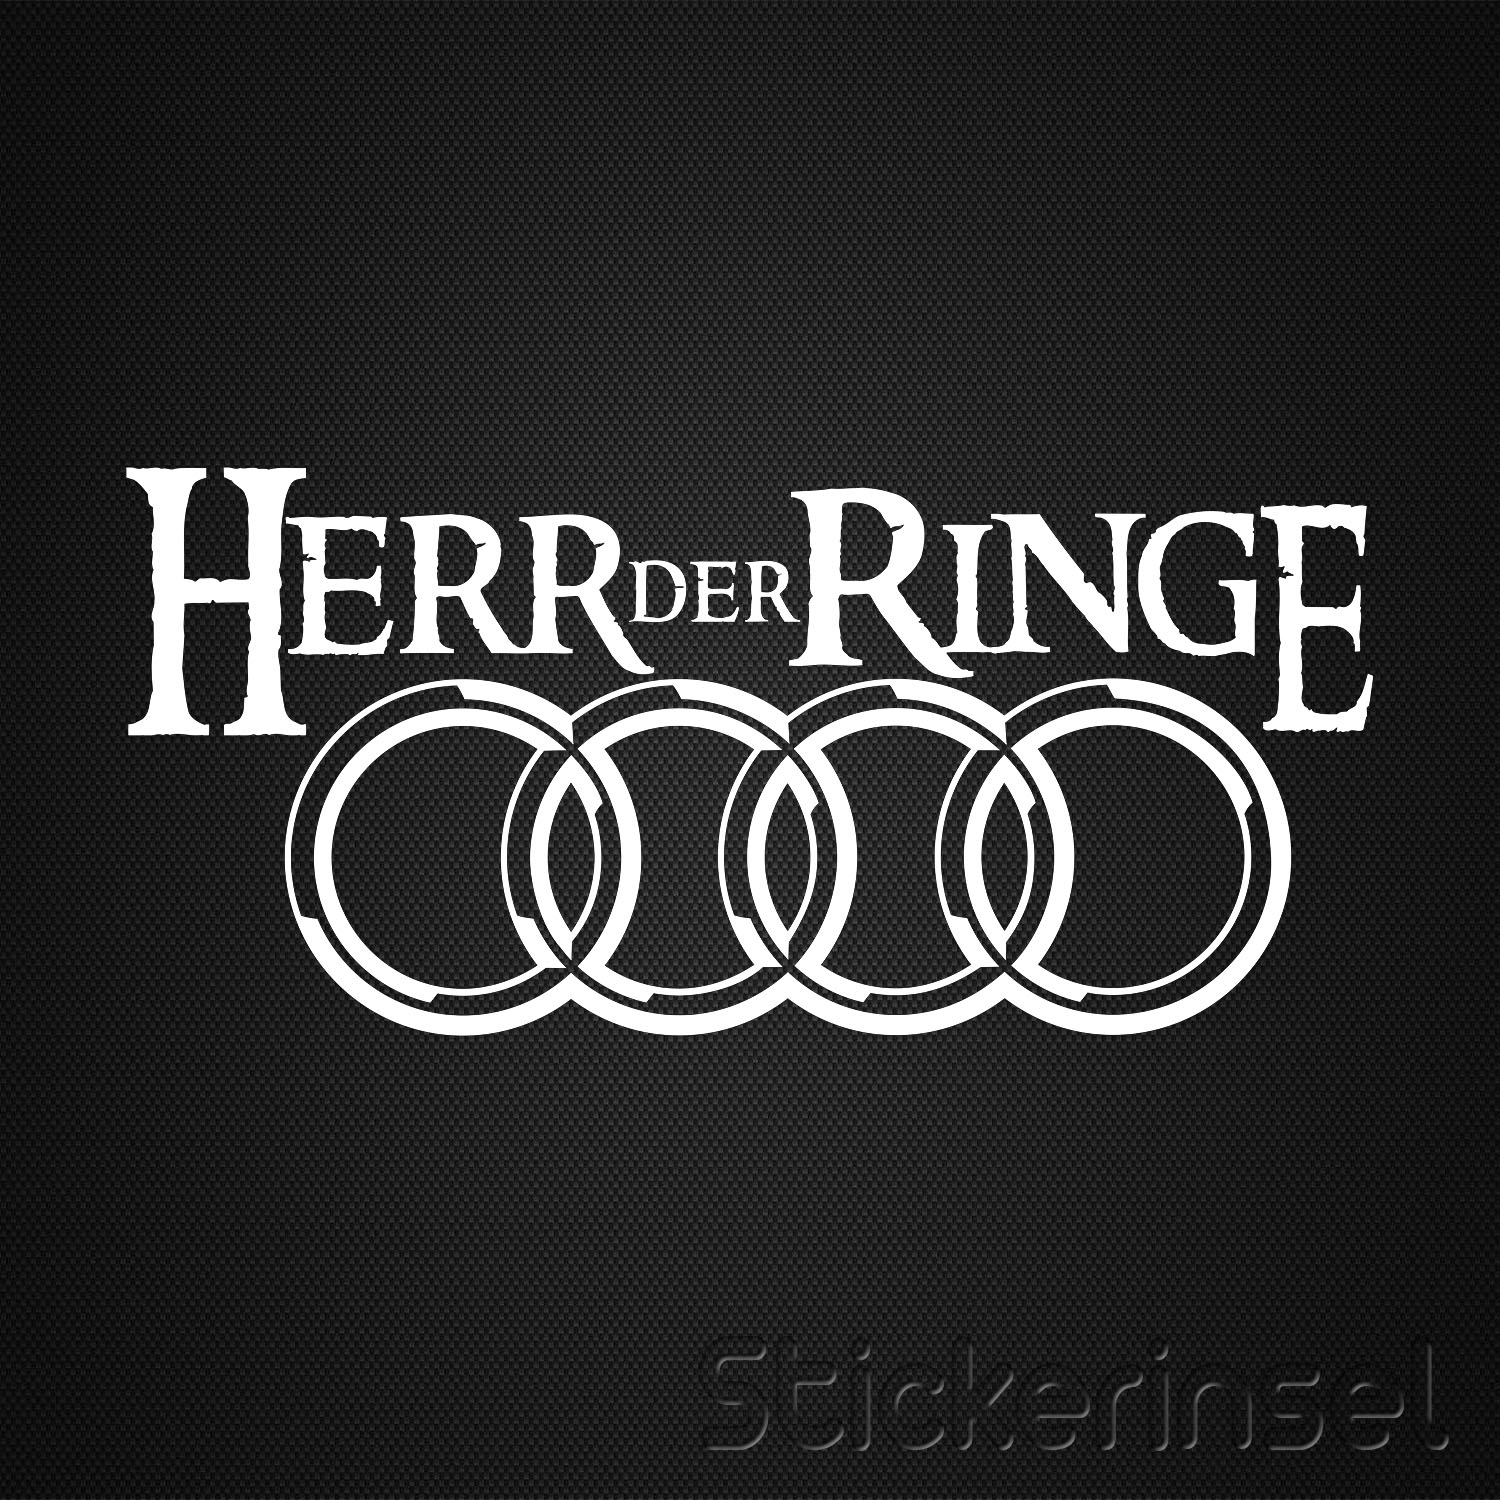 Audi Herr der Ringe